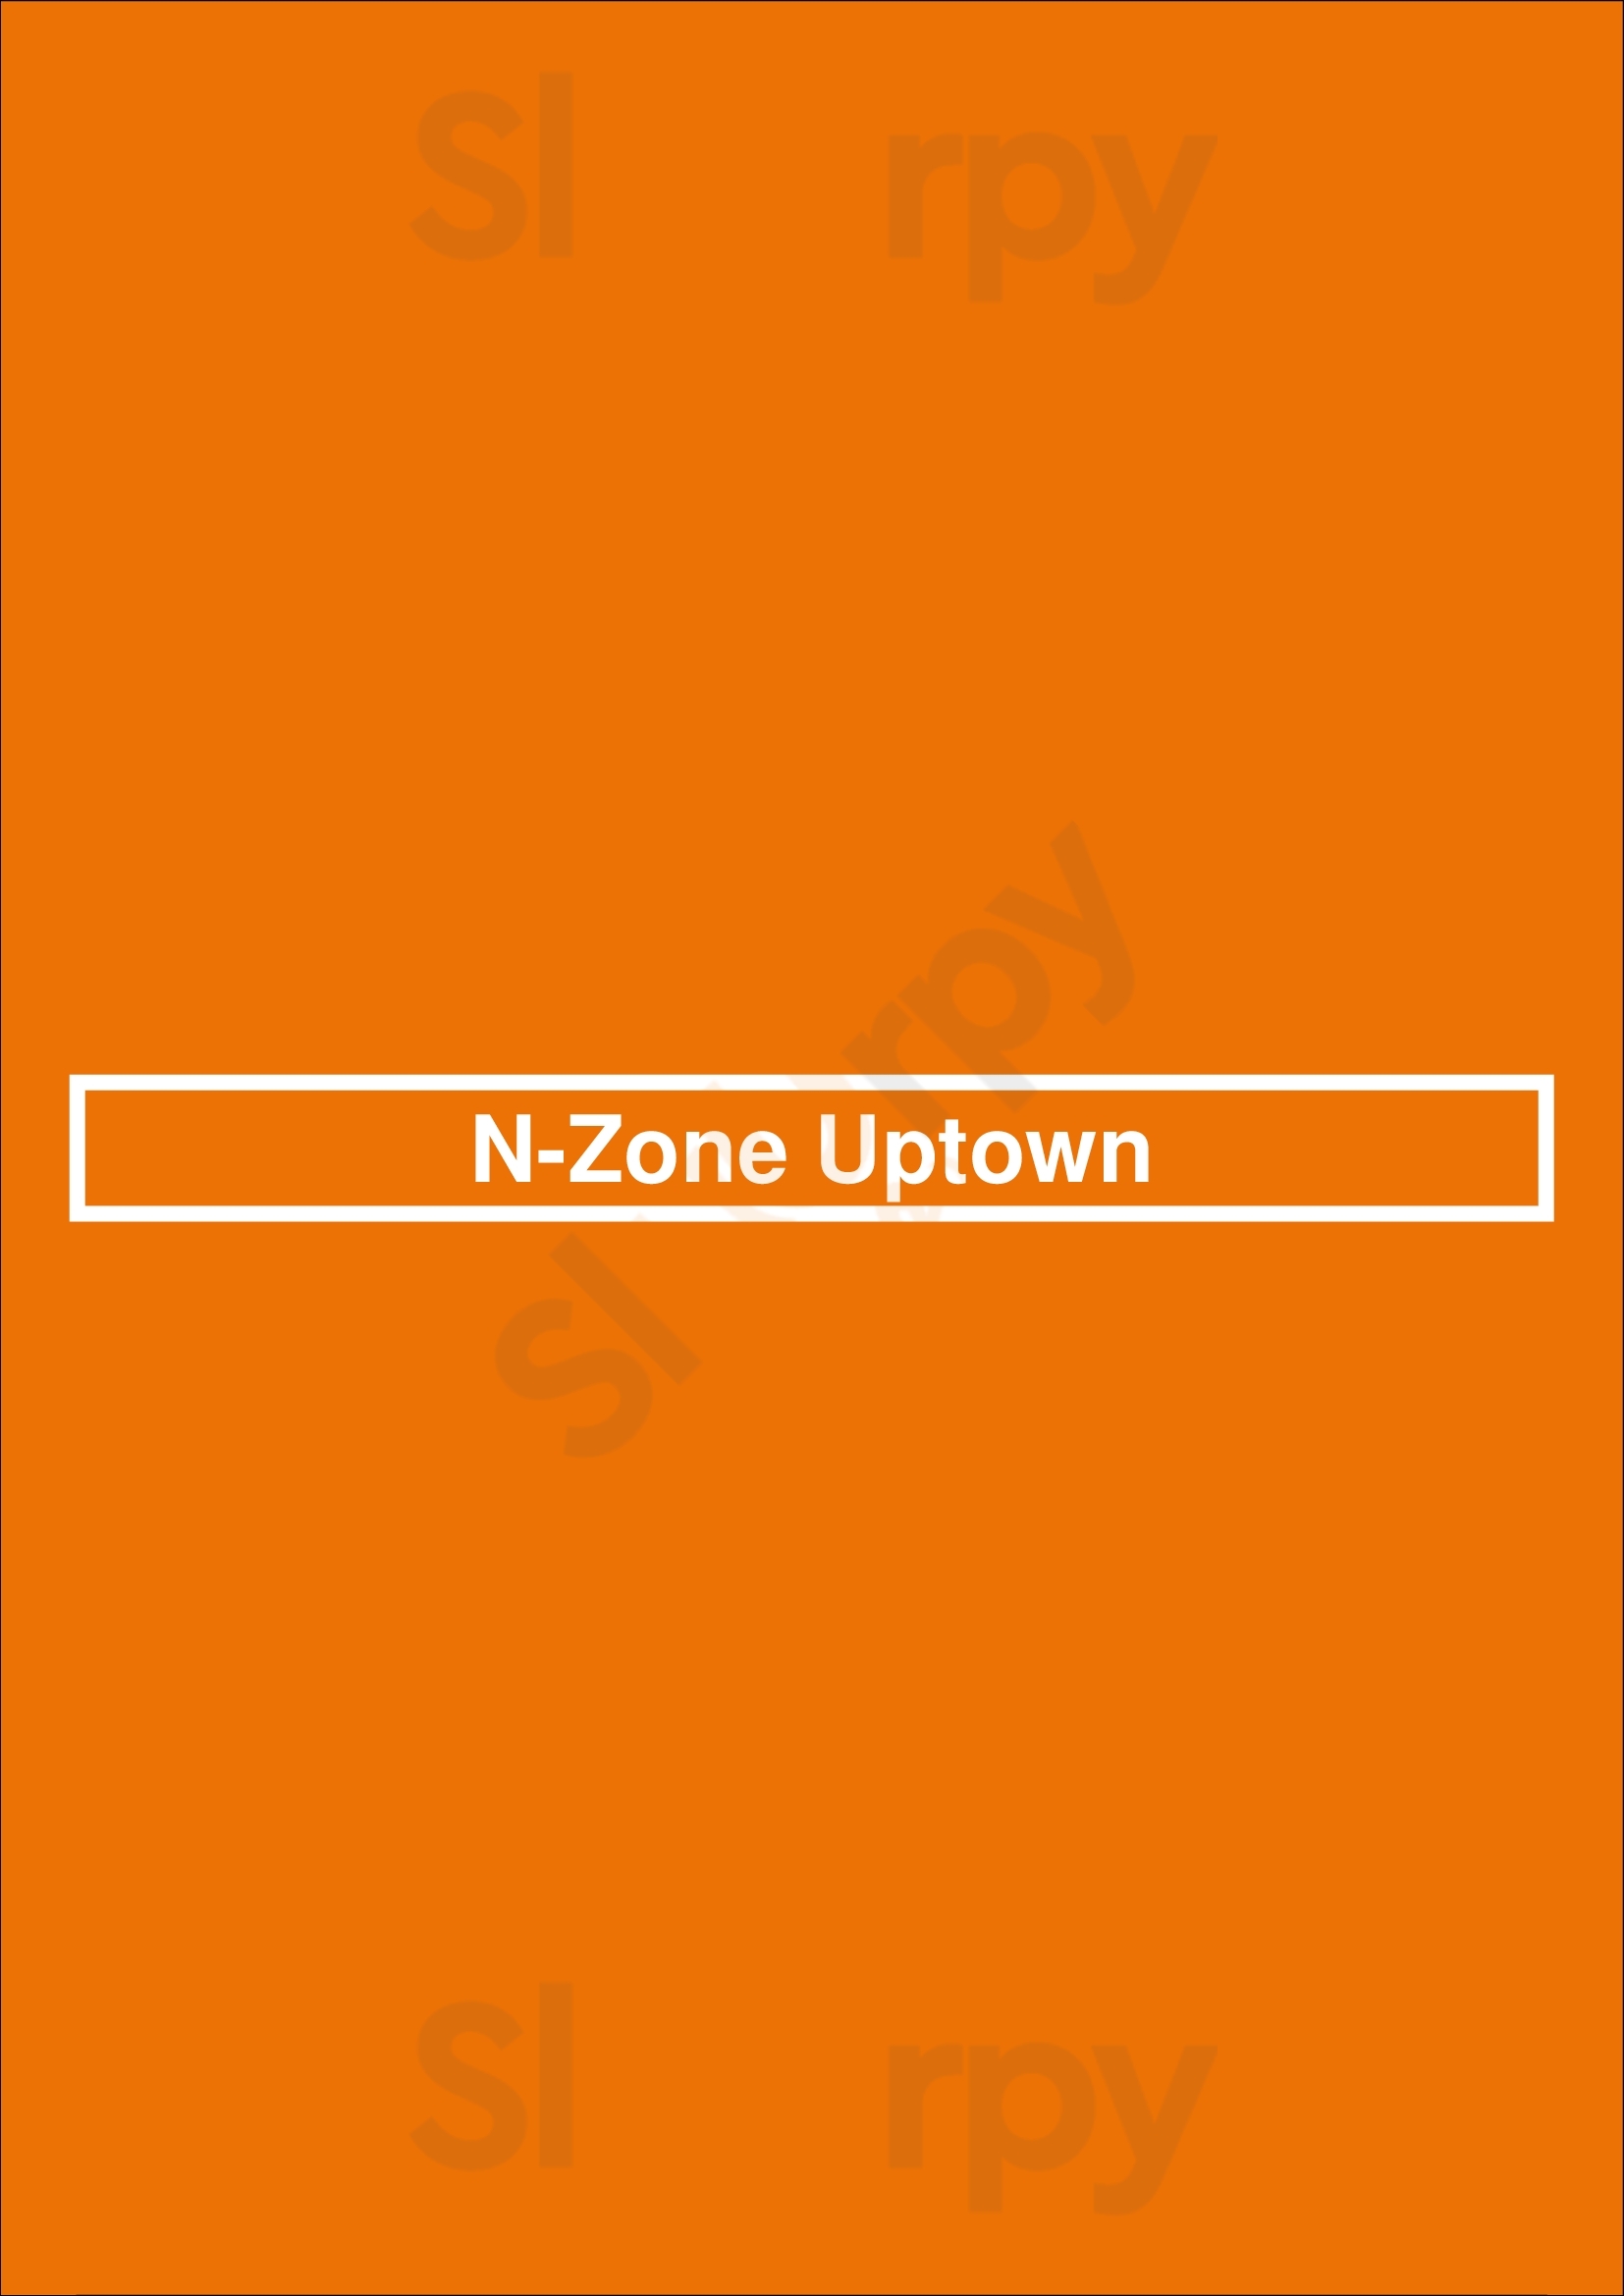 N-zone Uptown Oakland Menu - 1